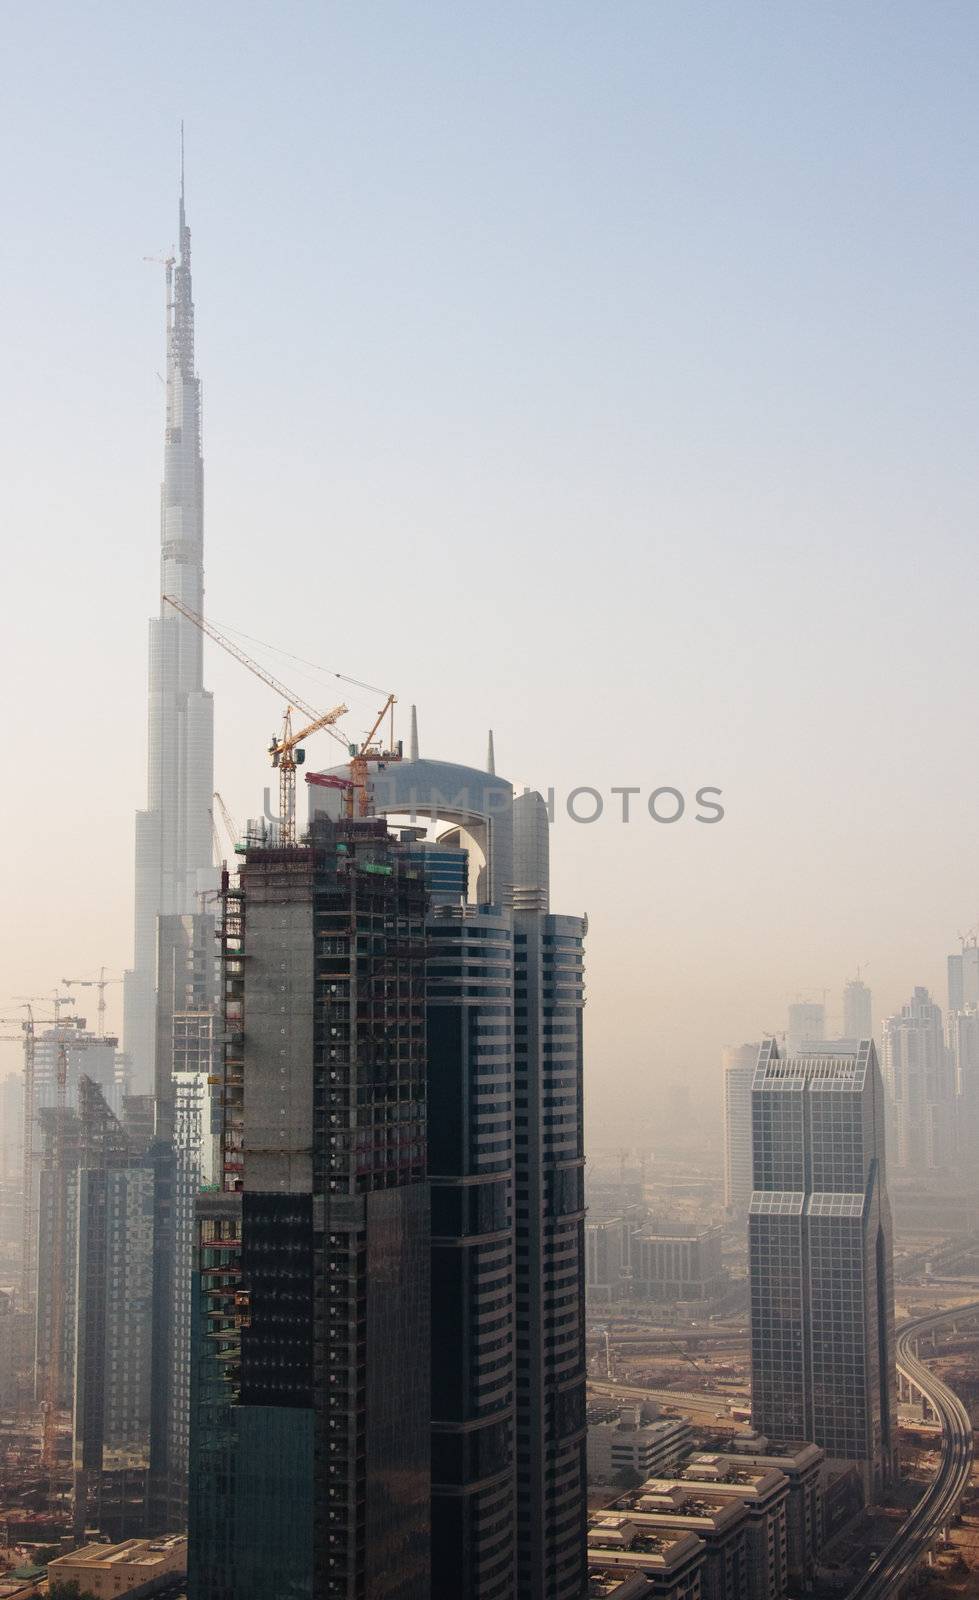 Cityscape of Dubai by steheap